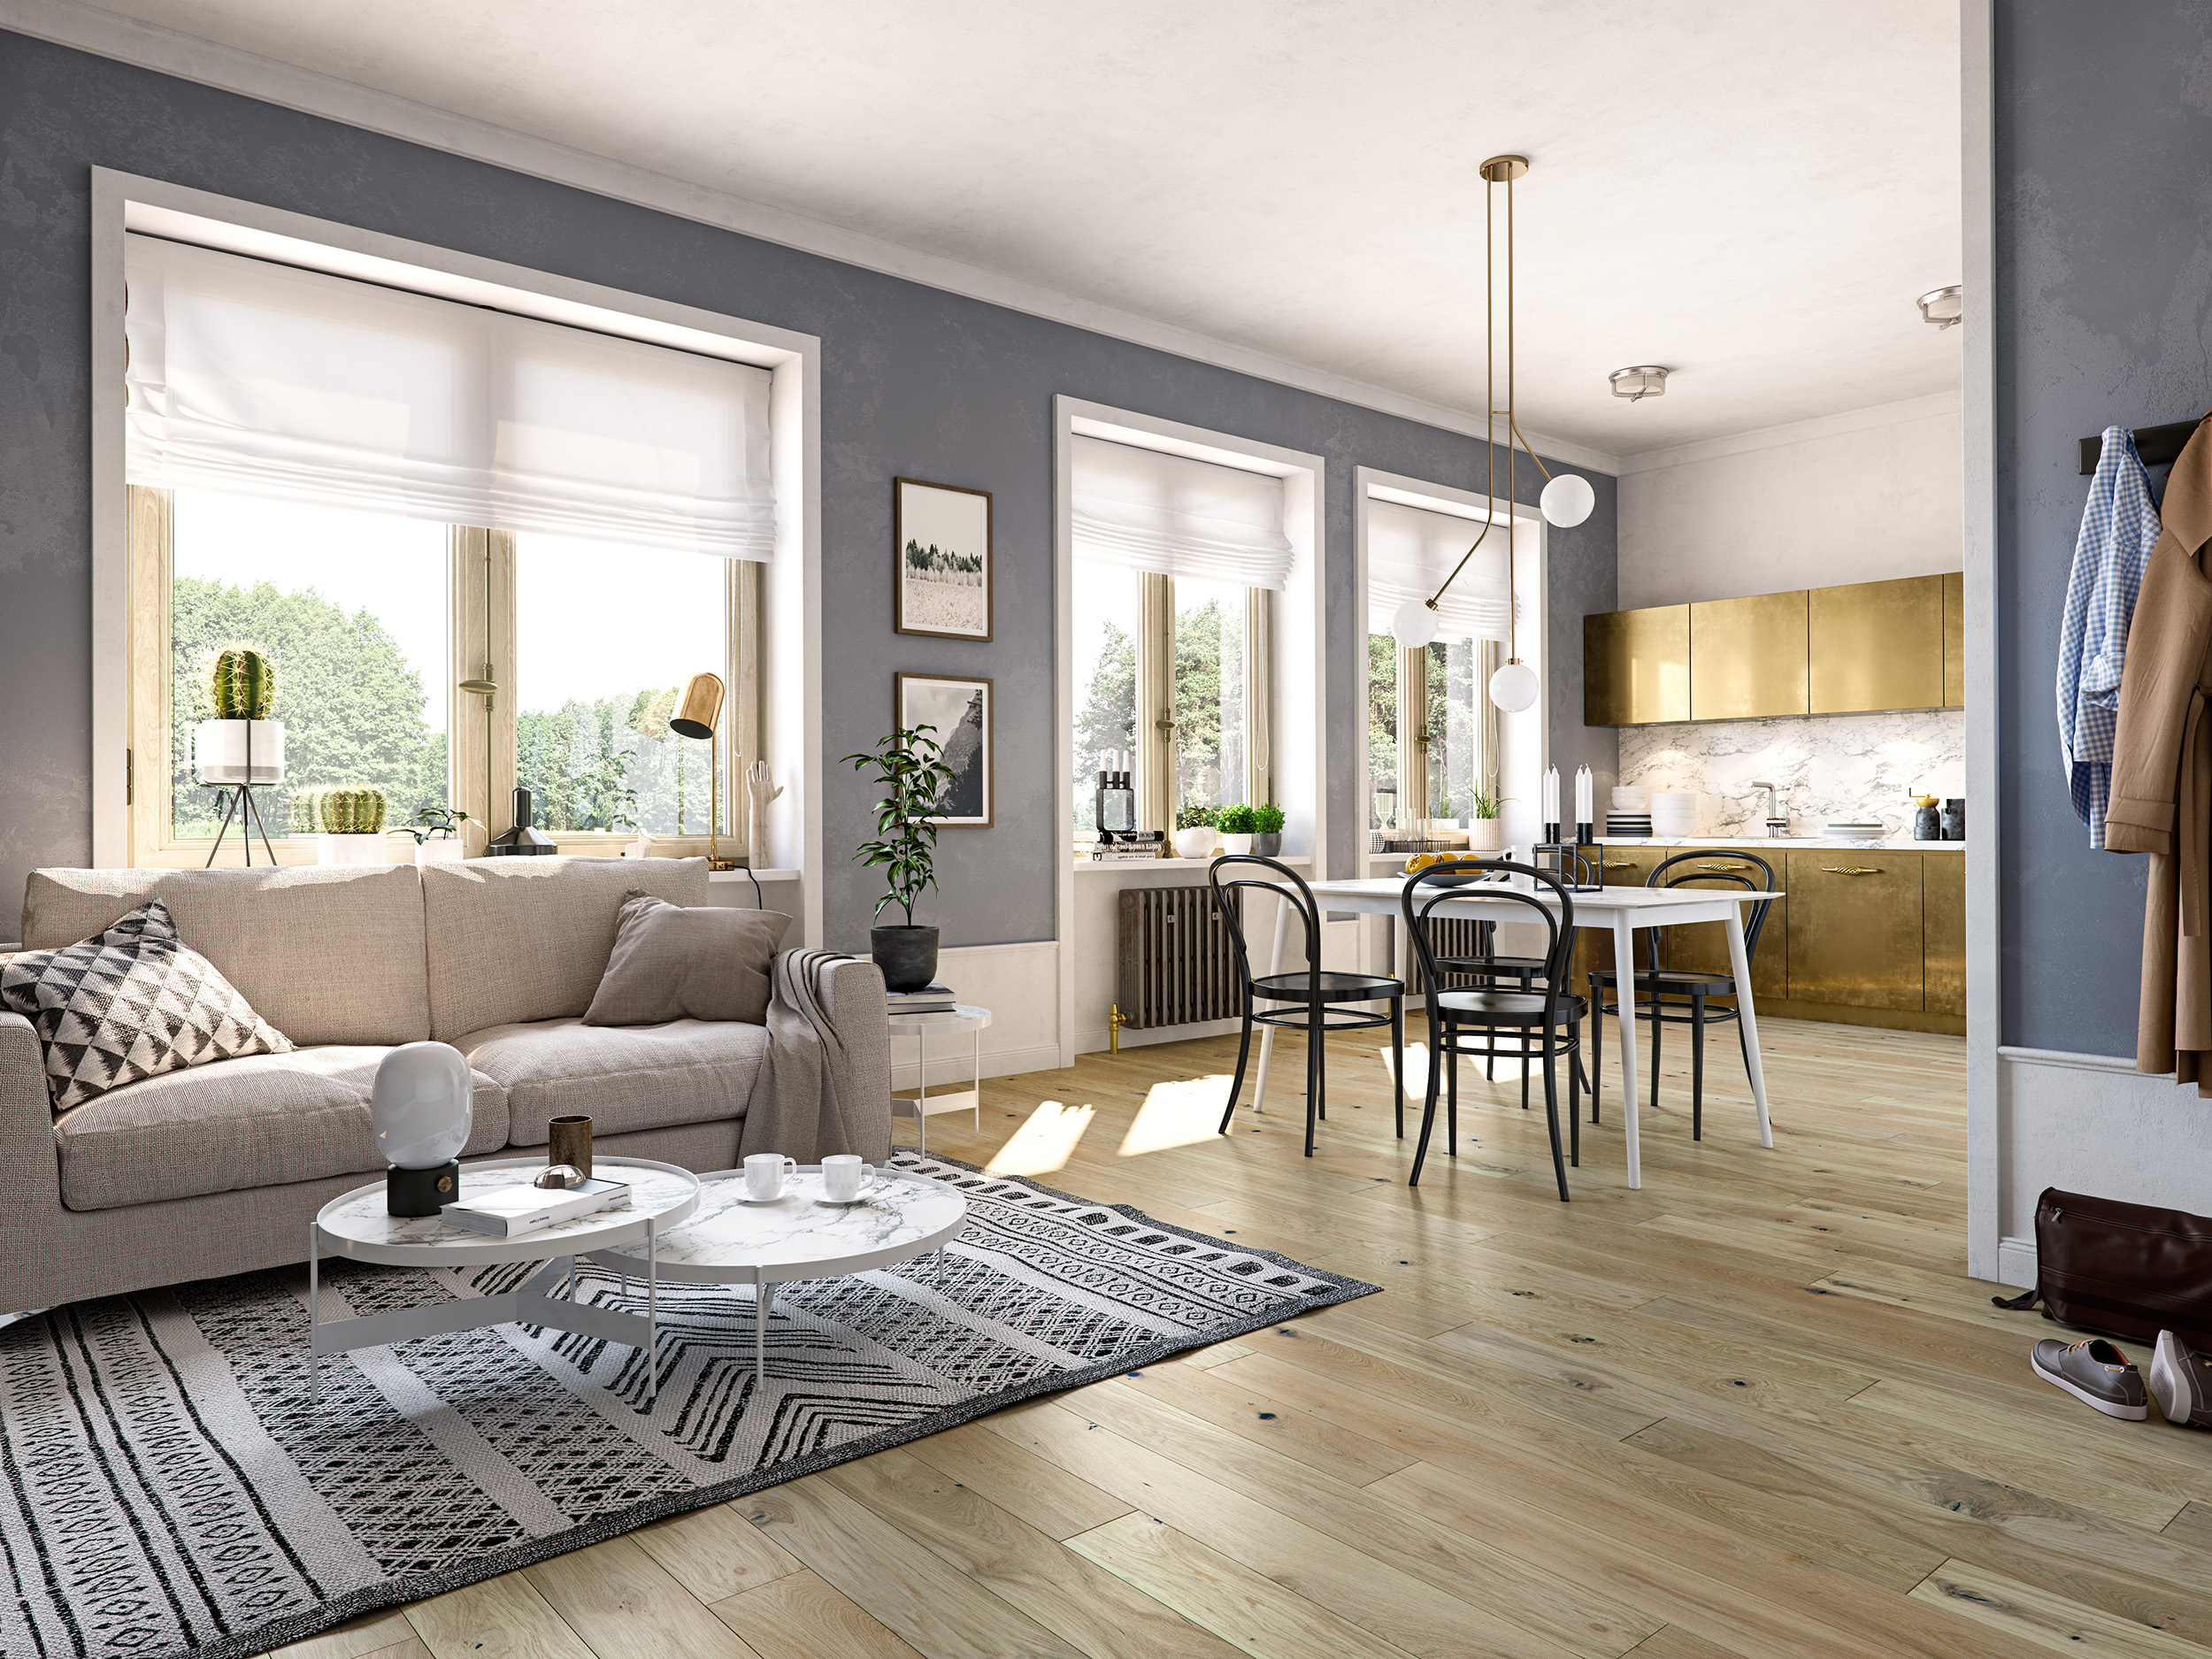 Wooden Parquet Flooring Living Room Inspirations